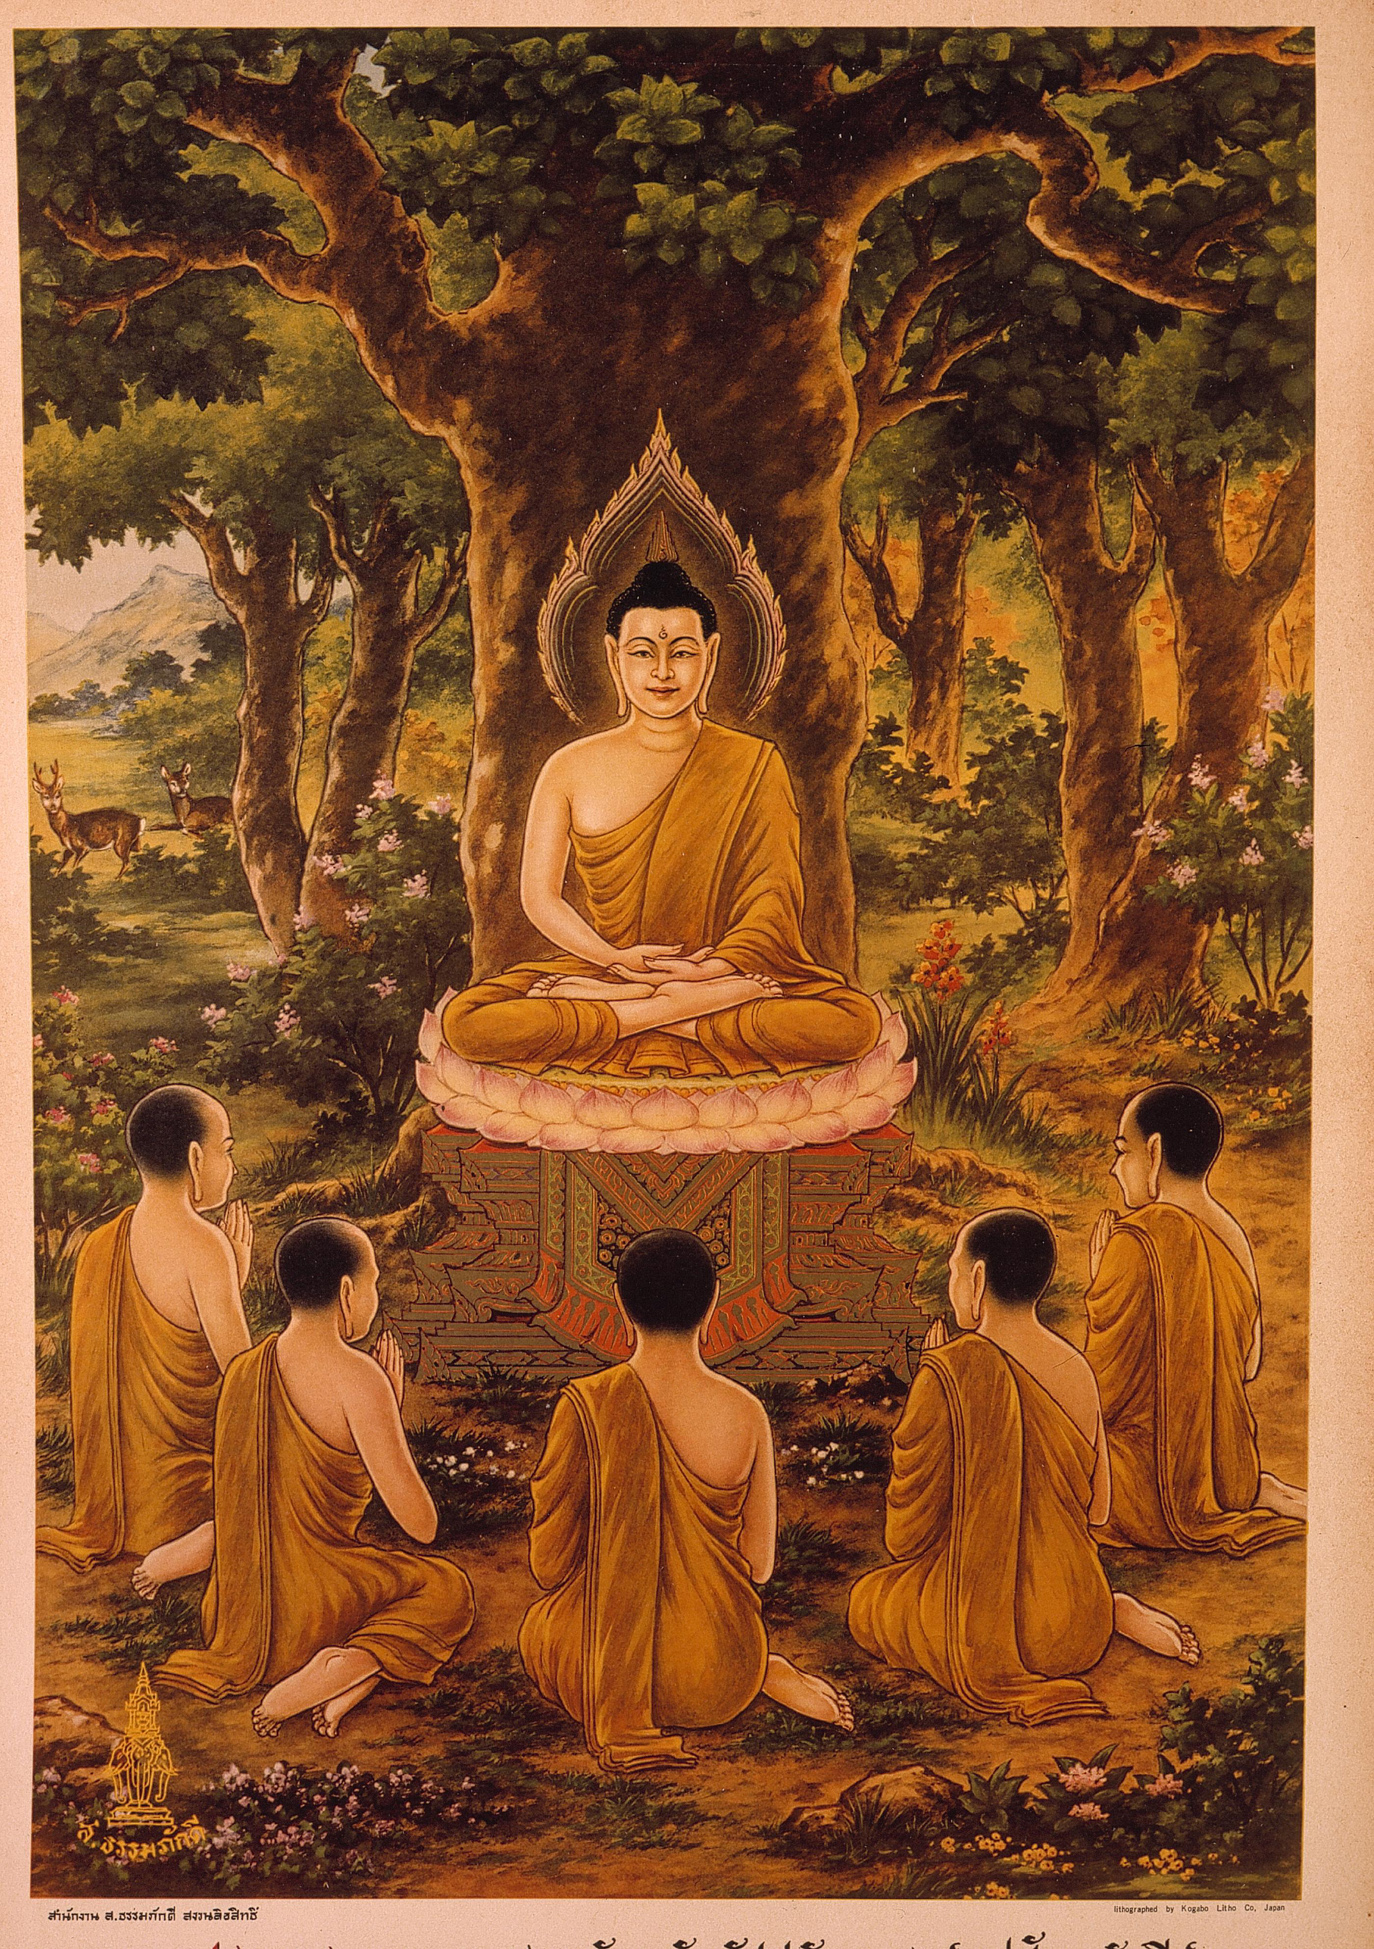 The Life Of The Buddha Thailand Buddhistdoor